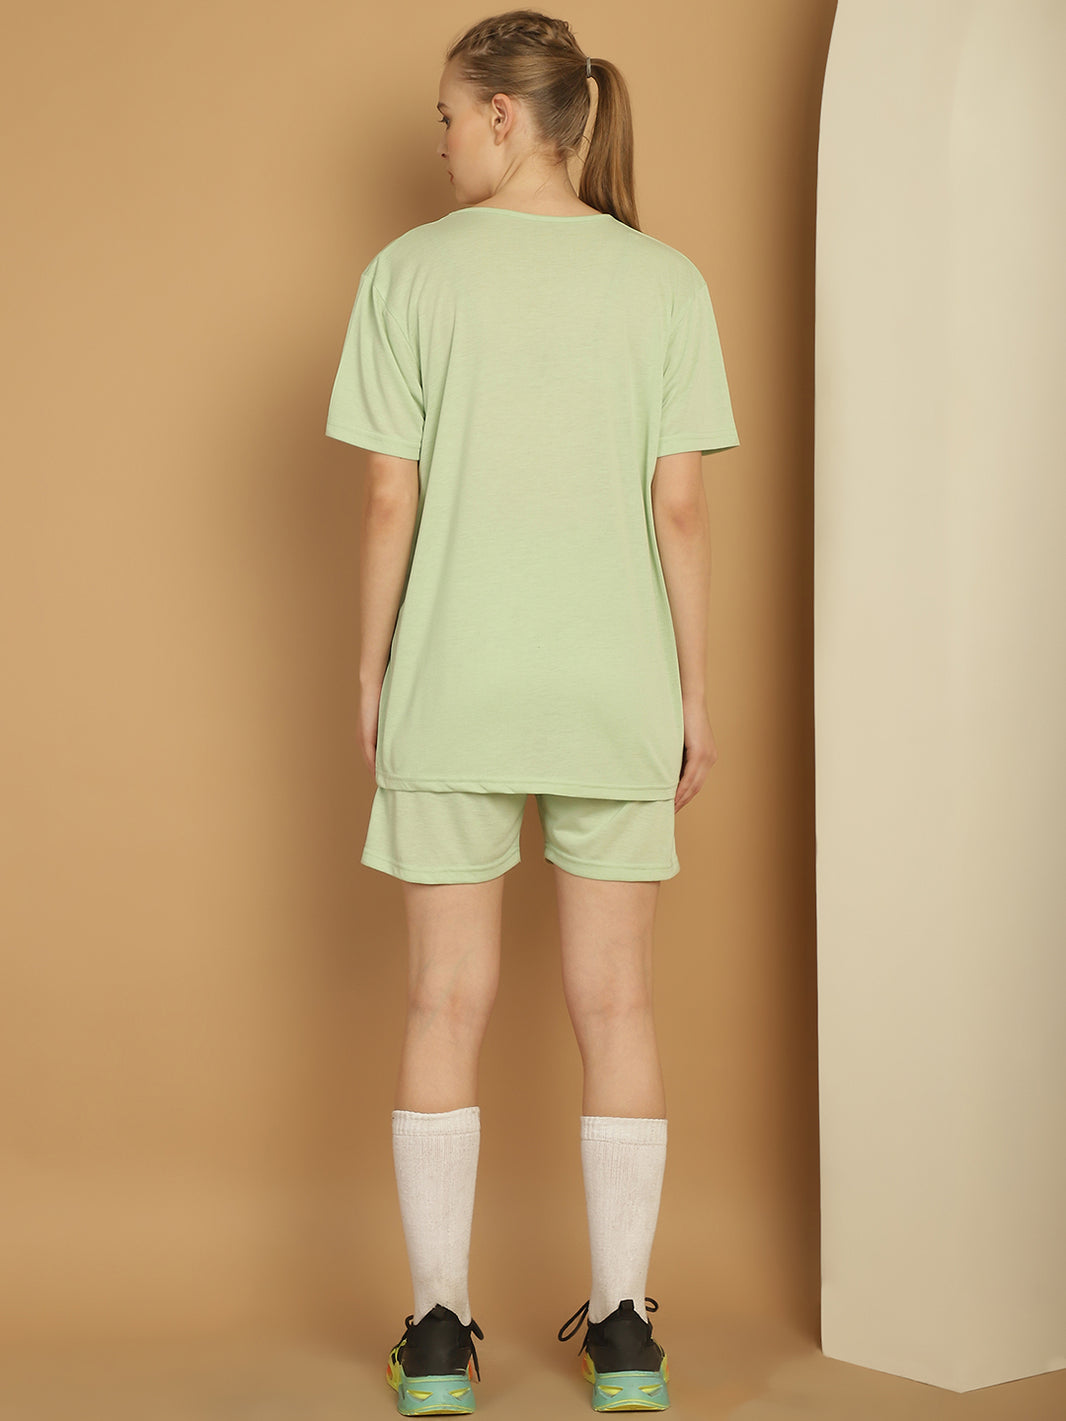 Vimal Jonney Light Green Cotton Solid Co-ord Set Tracksuit For Women